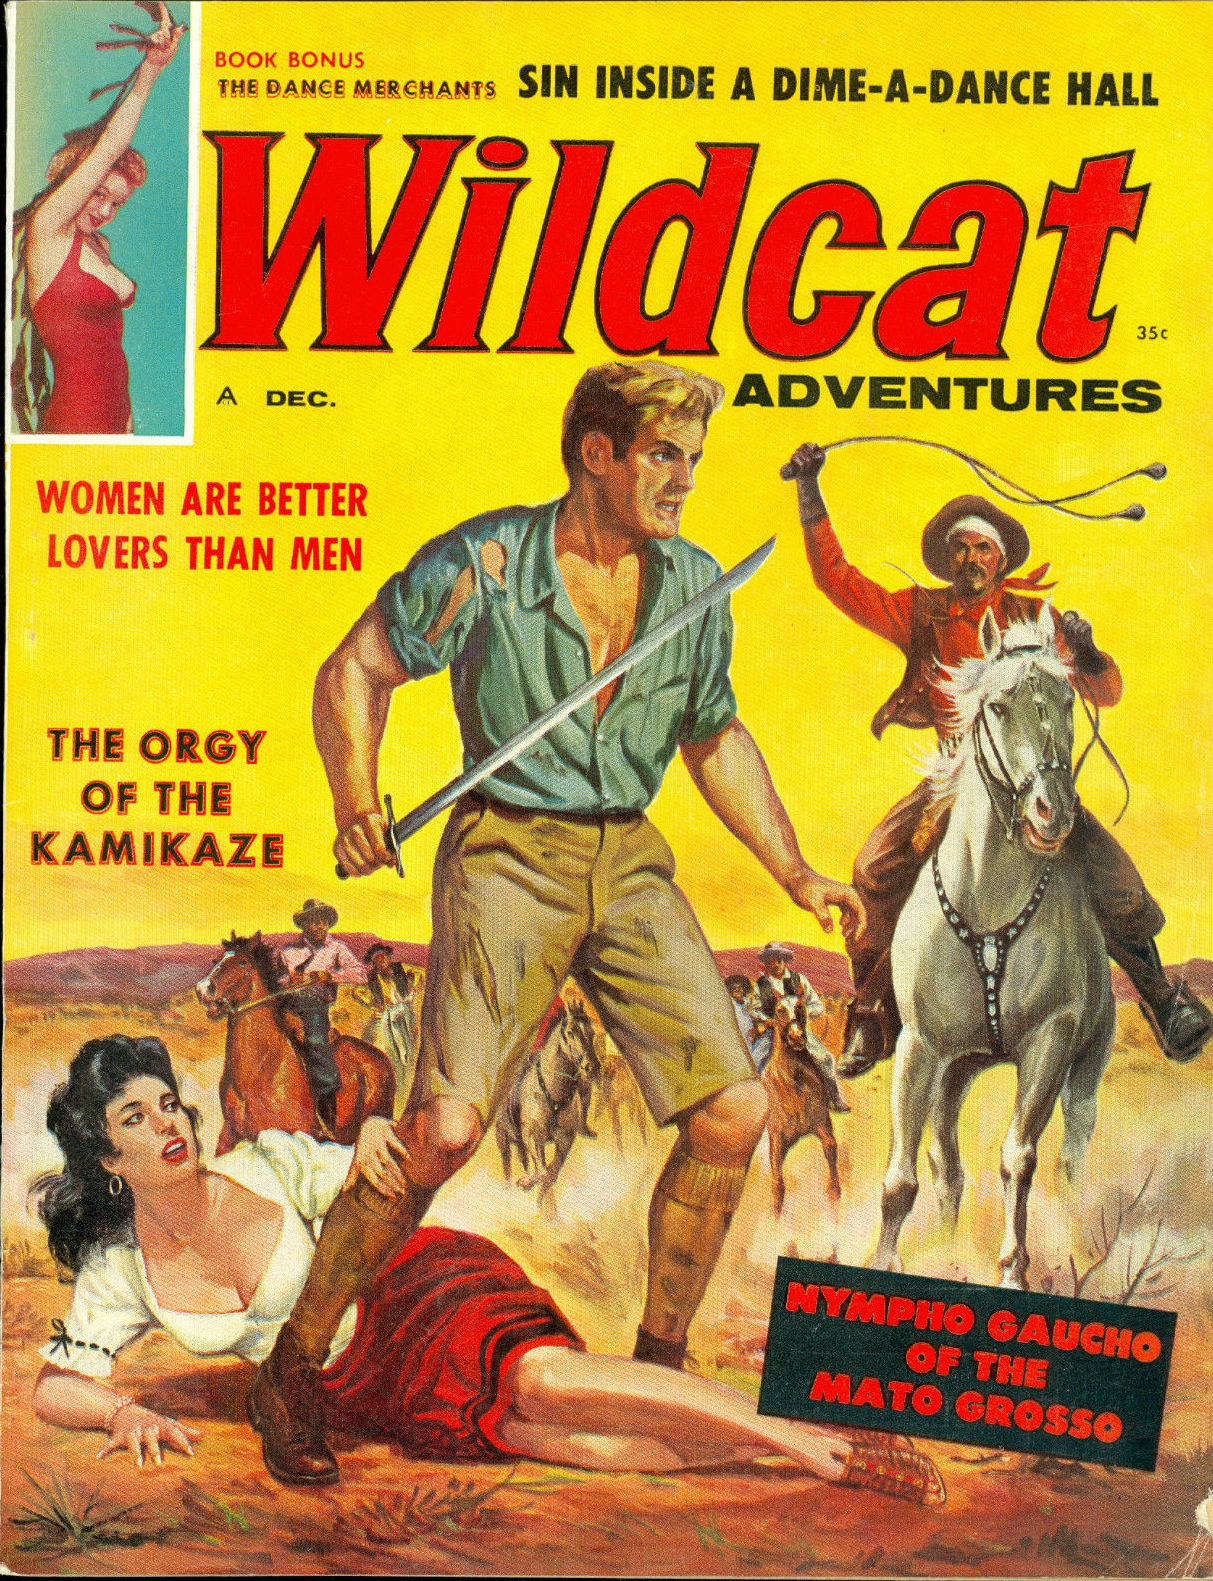 Adventures magazine. Wildcat Adventures журналы.